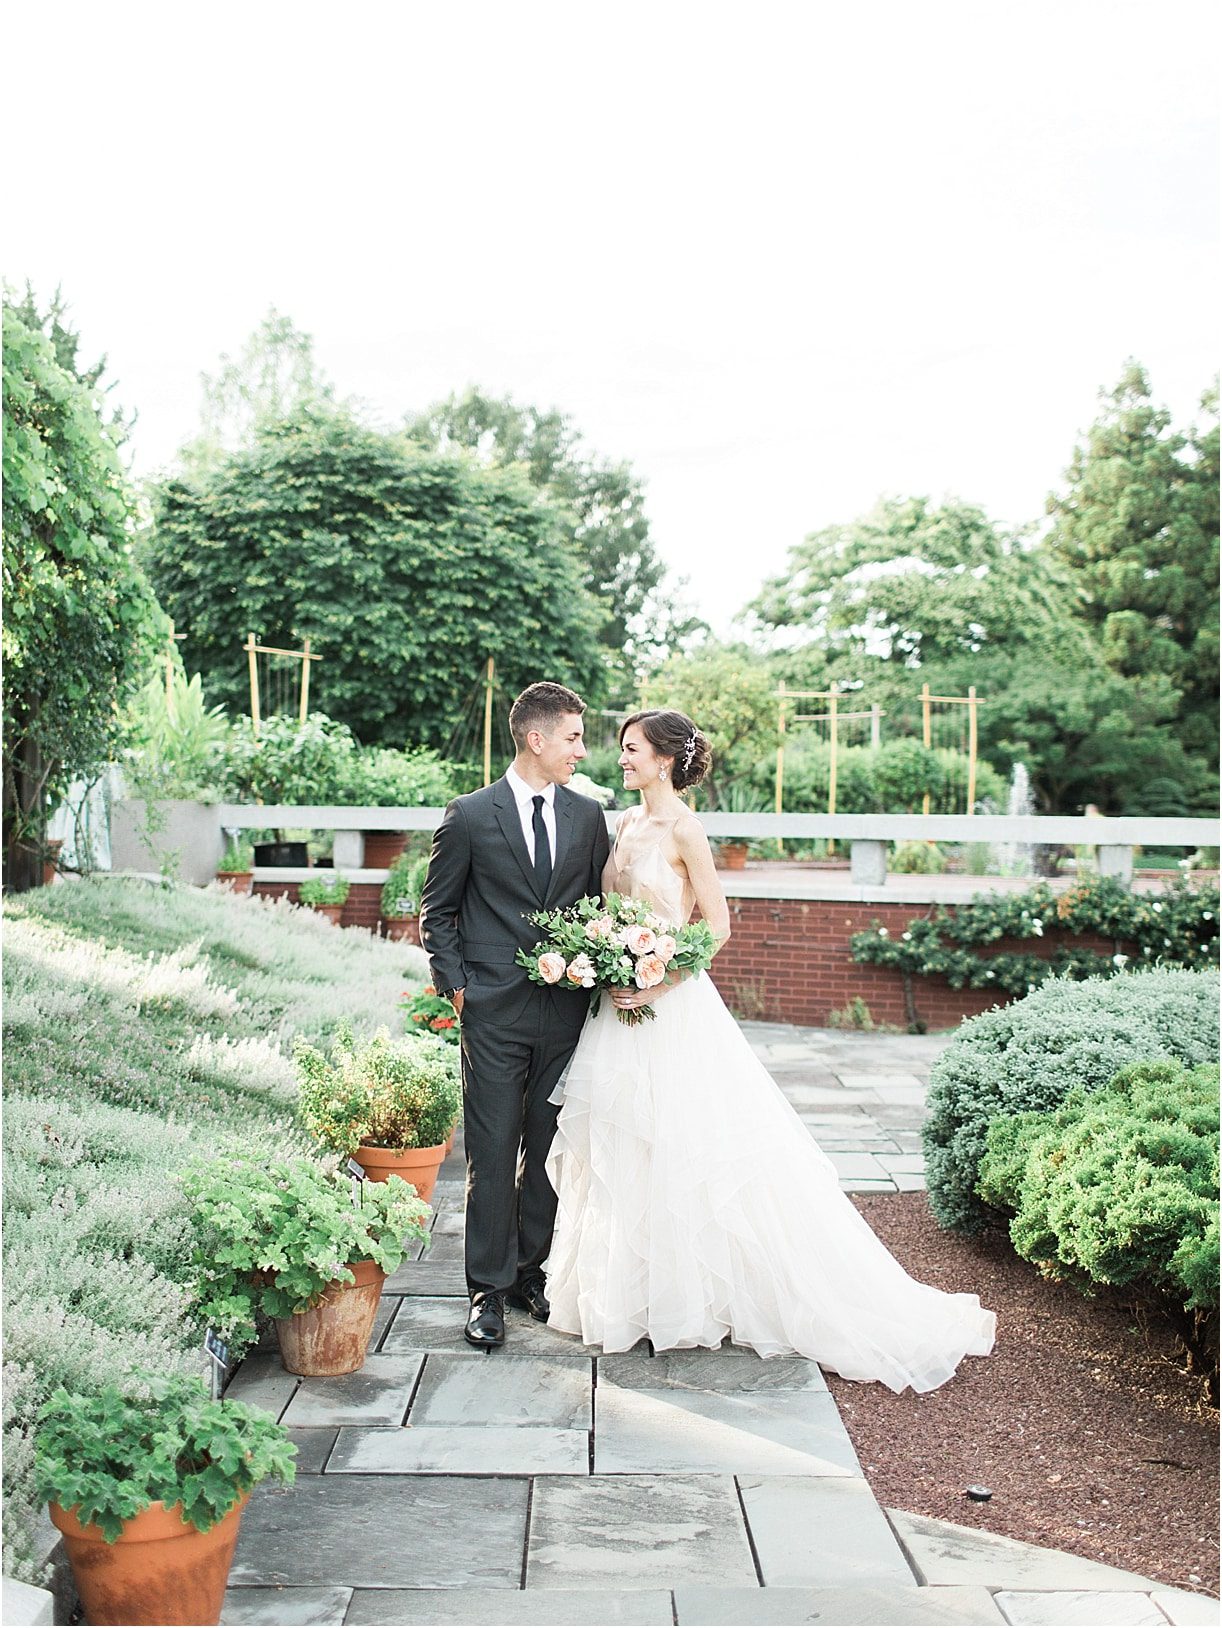 Peach Inspired Wedding Inspiration at the Arboretum Garden Groom Couple Newlyweds